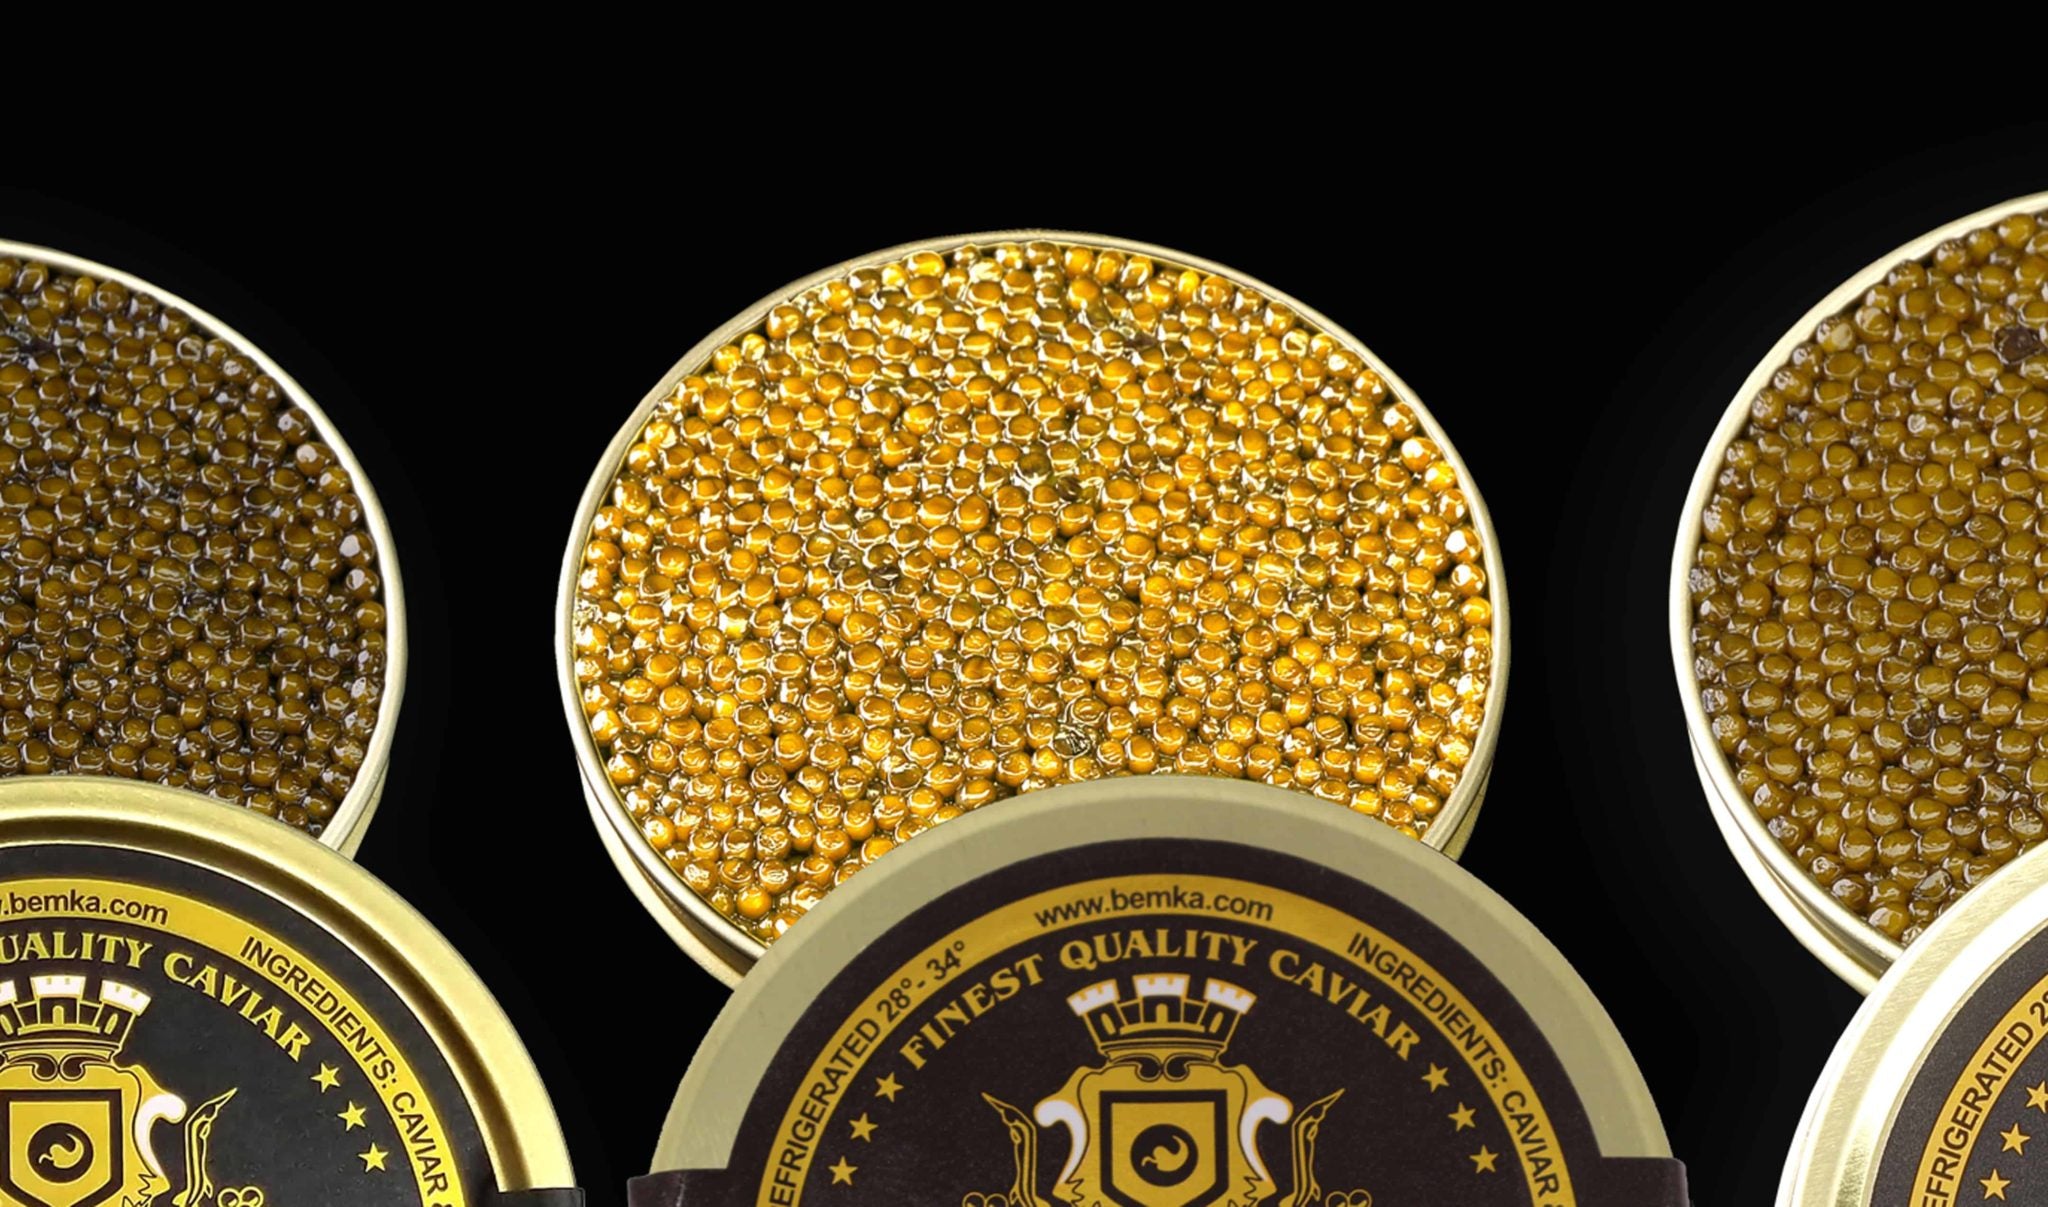 3 tins of caviar photo